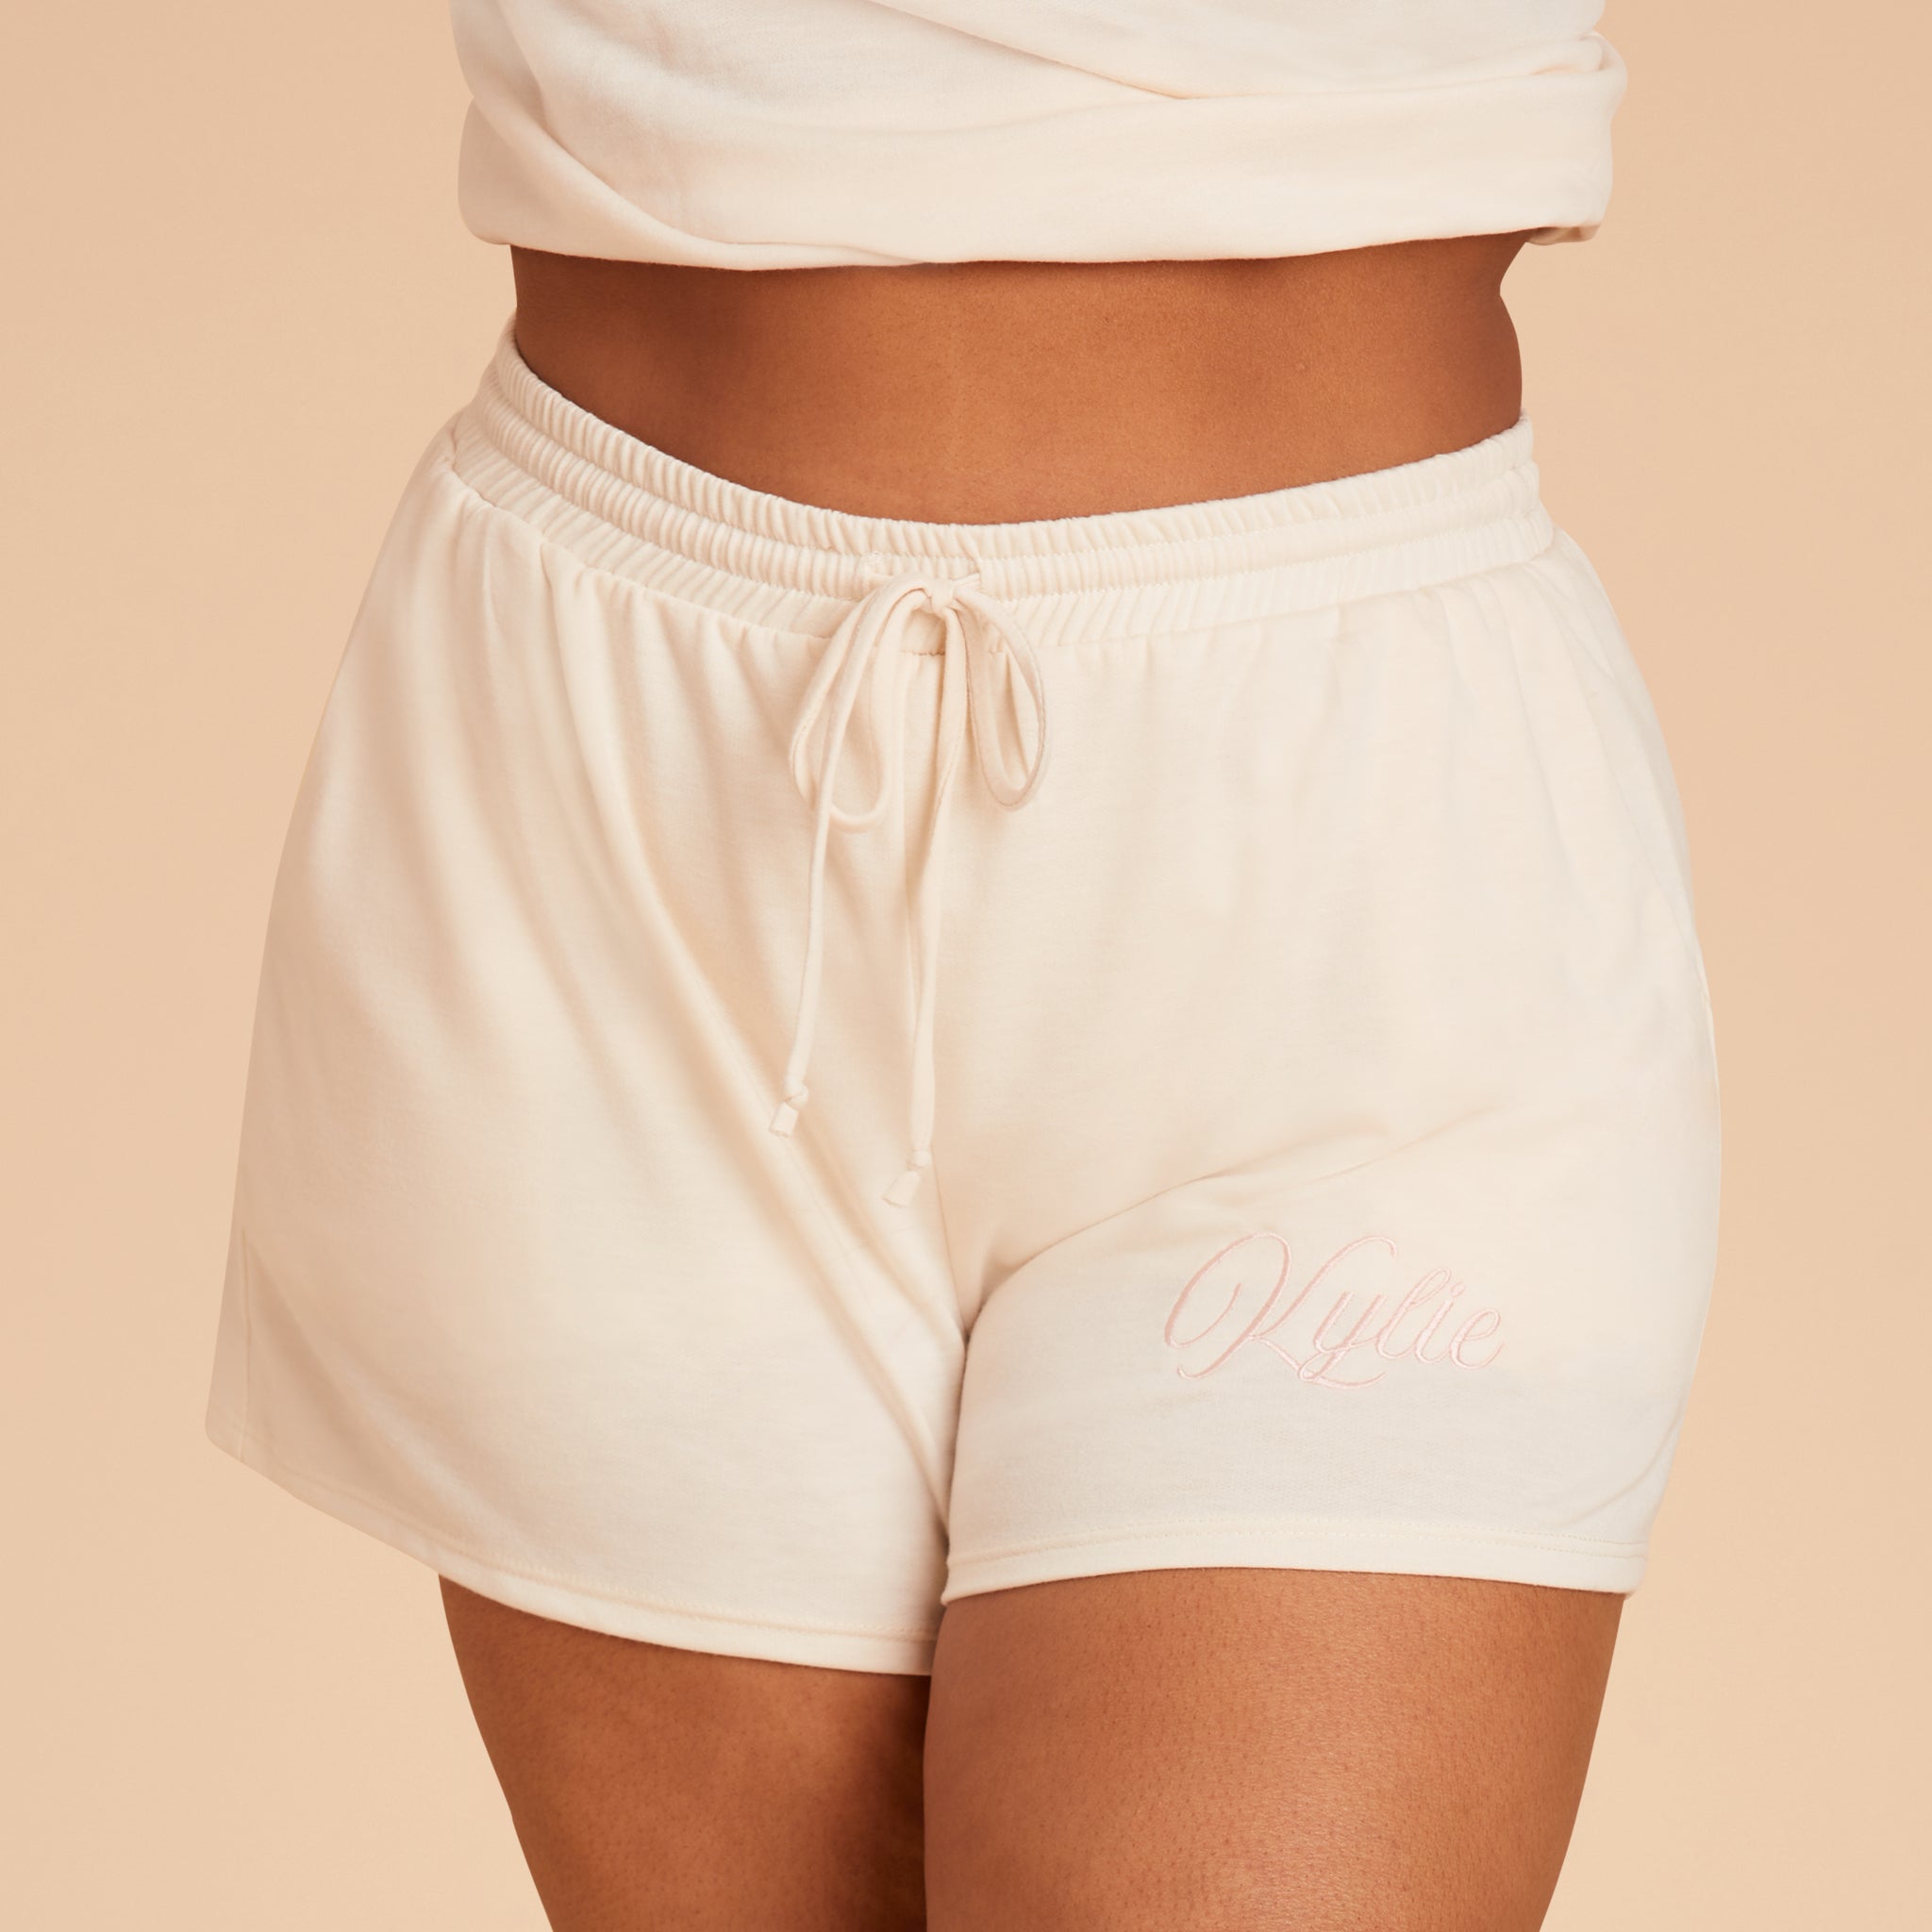 Plus Size Monogram shorts in vanilla cream front view